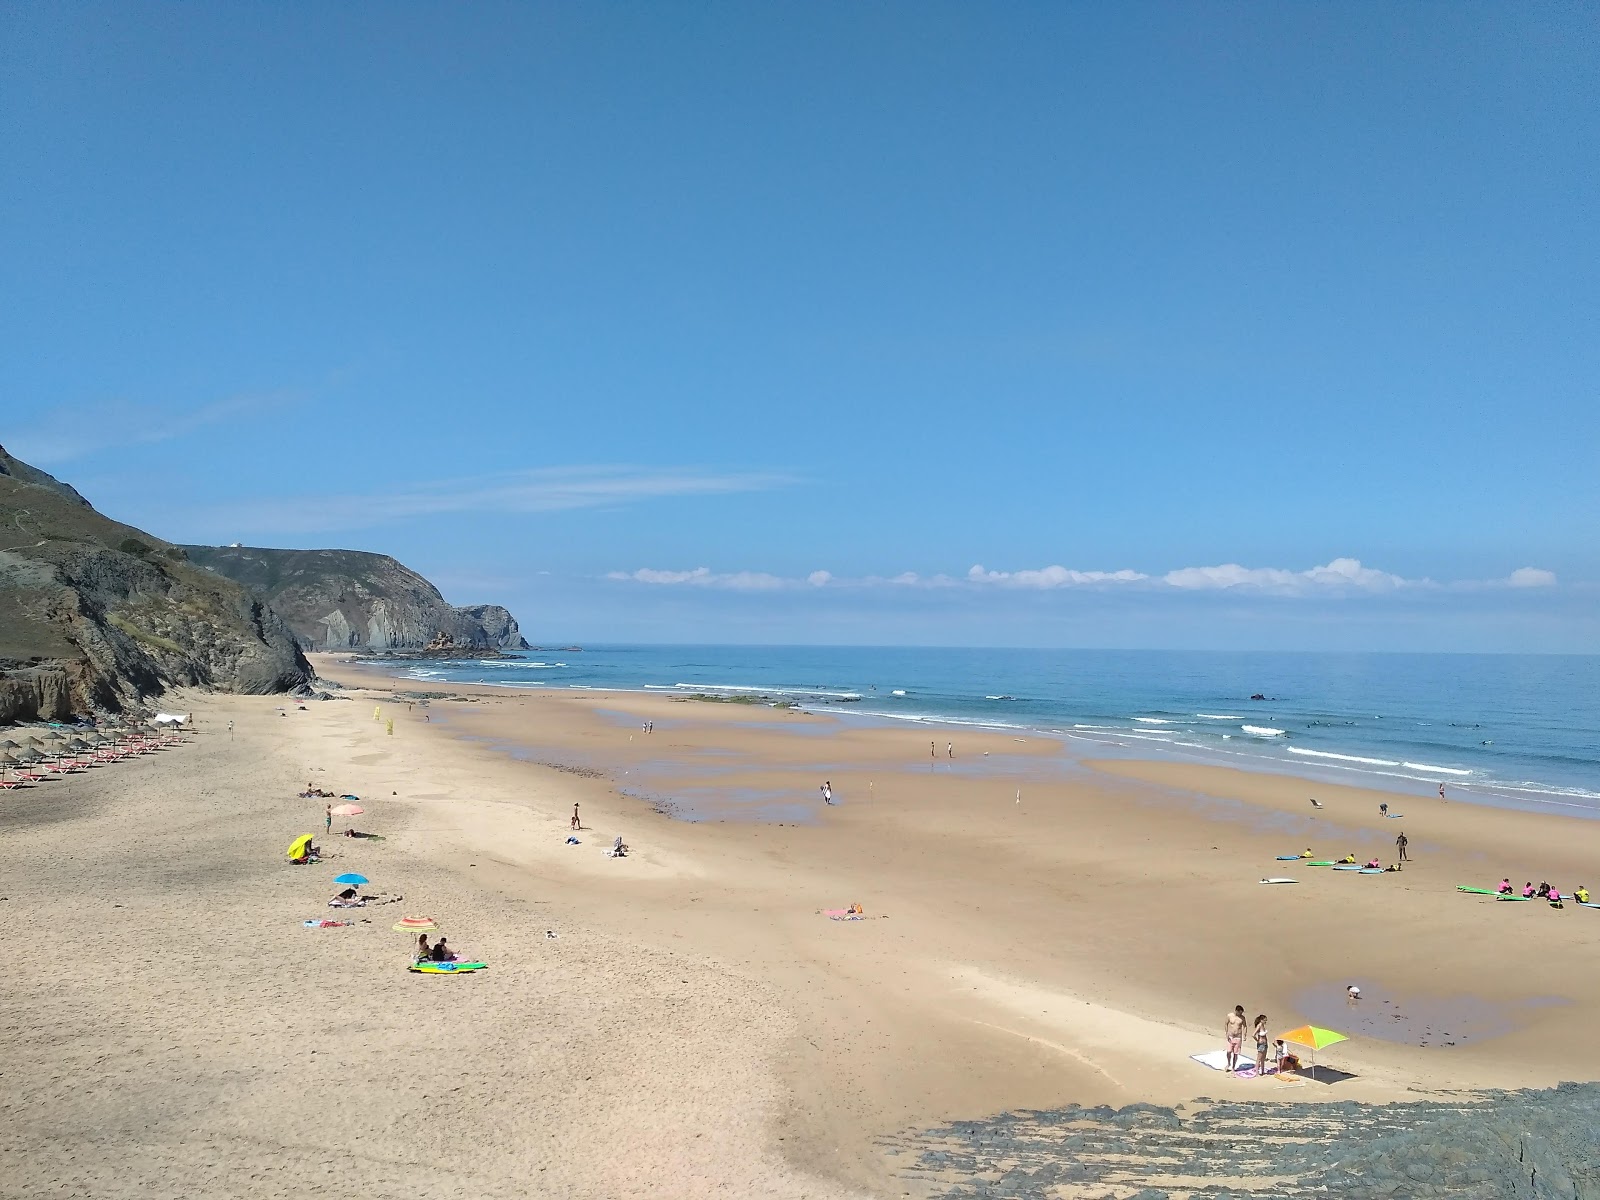 Photo de Praia da Cordoama situé dans une zone naturelle